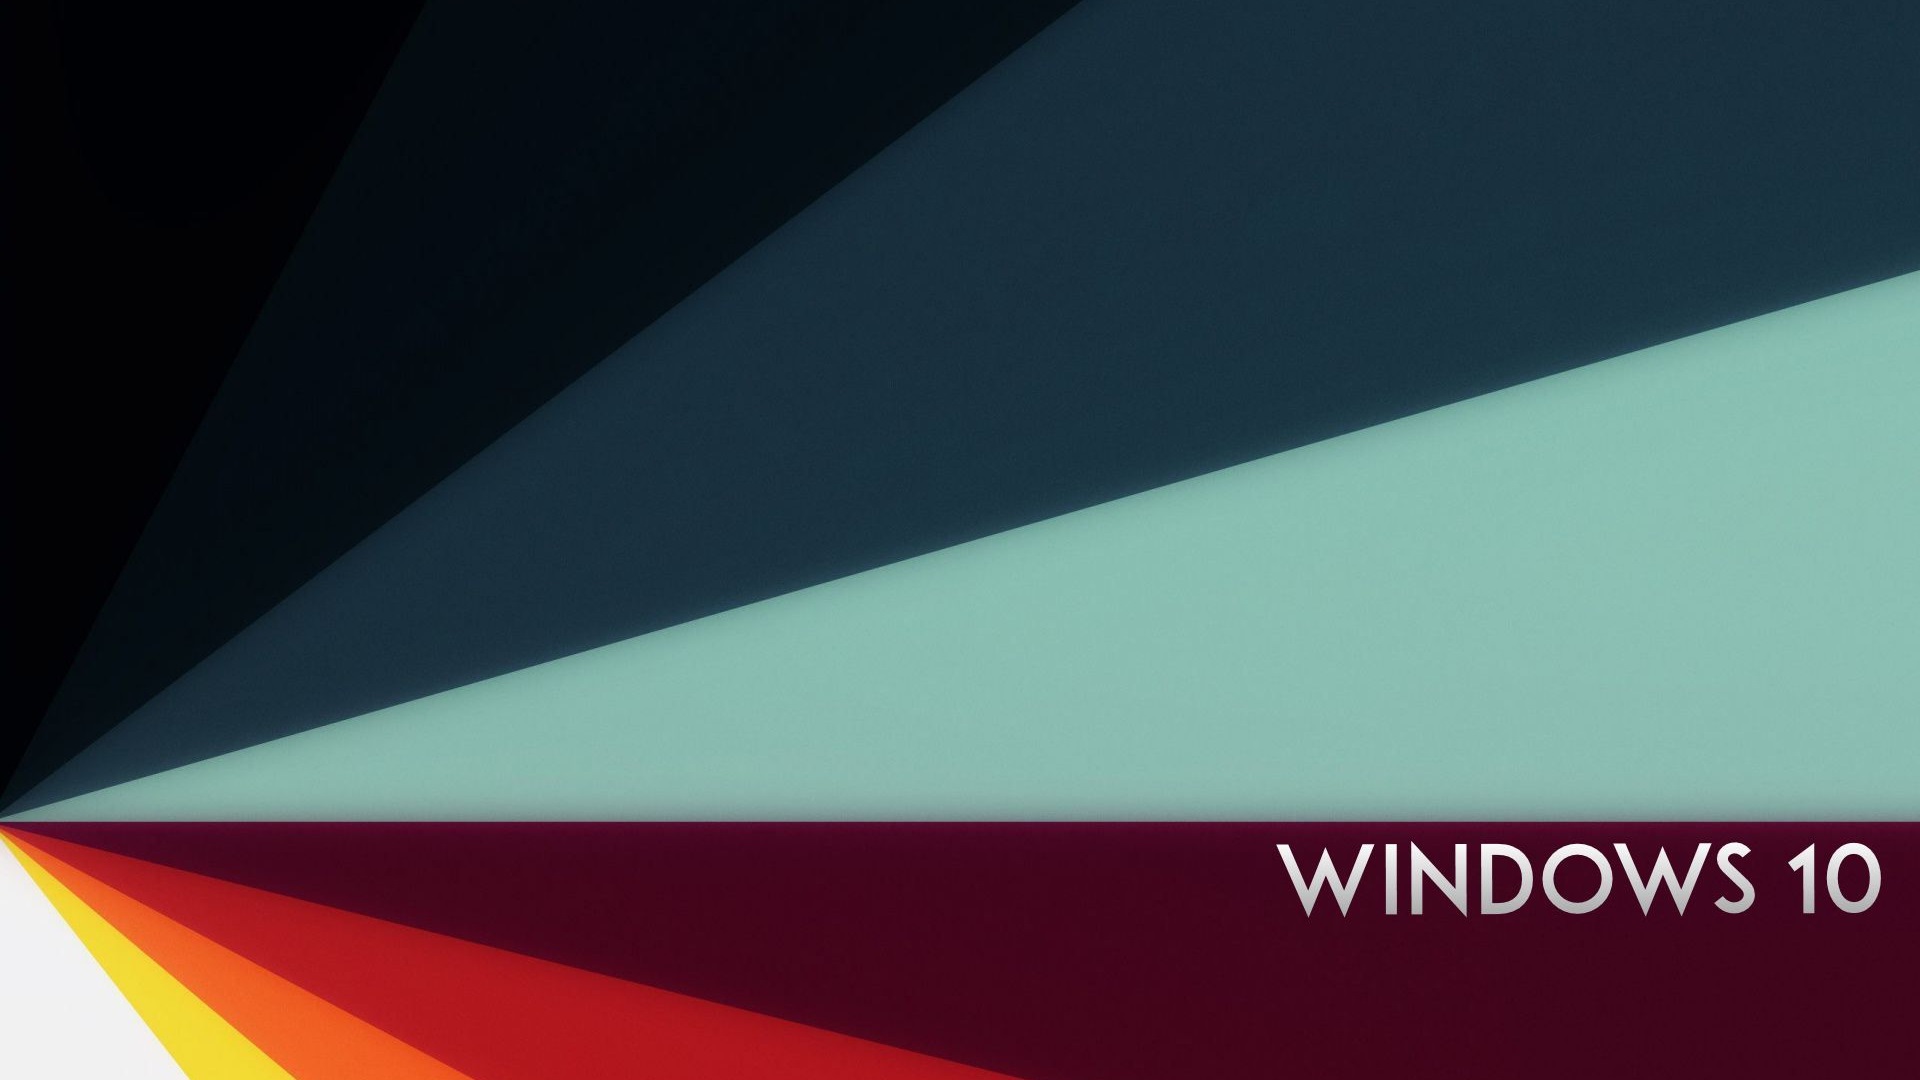 Windows - 10 - abstract - background_1920x1080.jpg